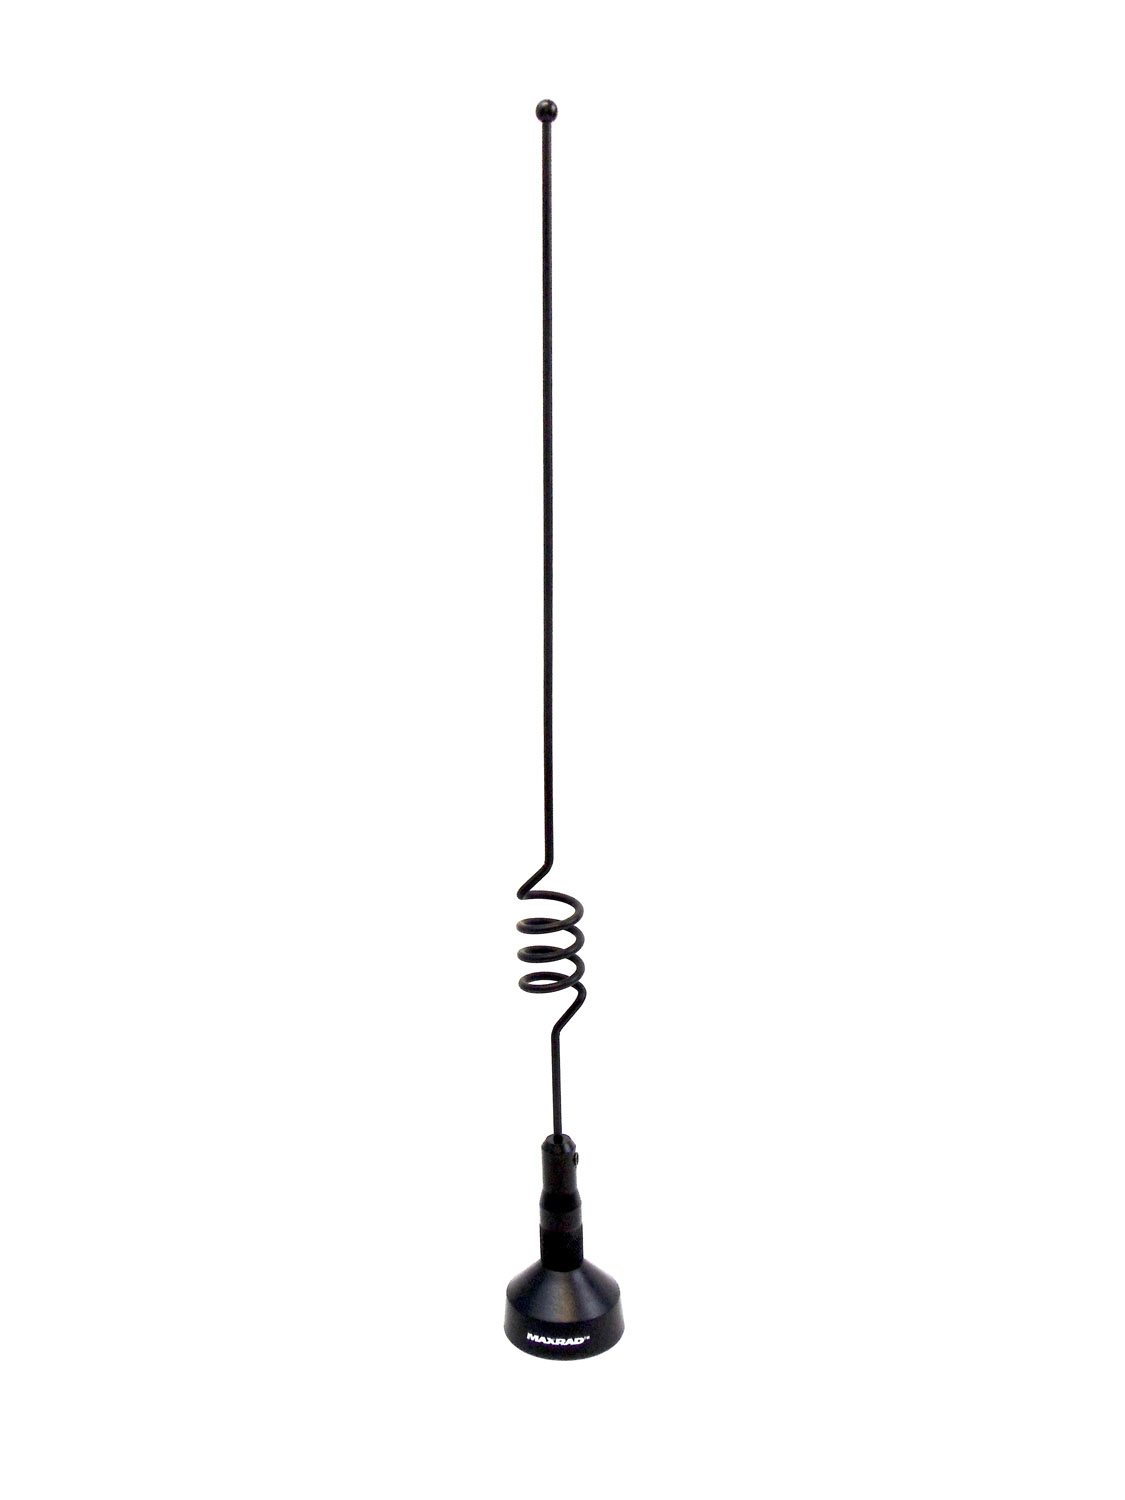 806-896Mhz 3 Db Black Antenna